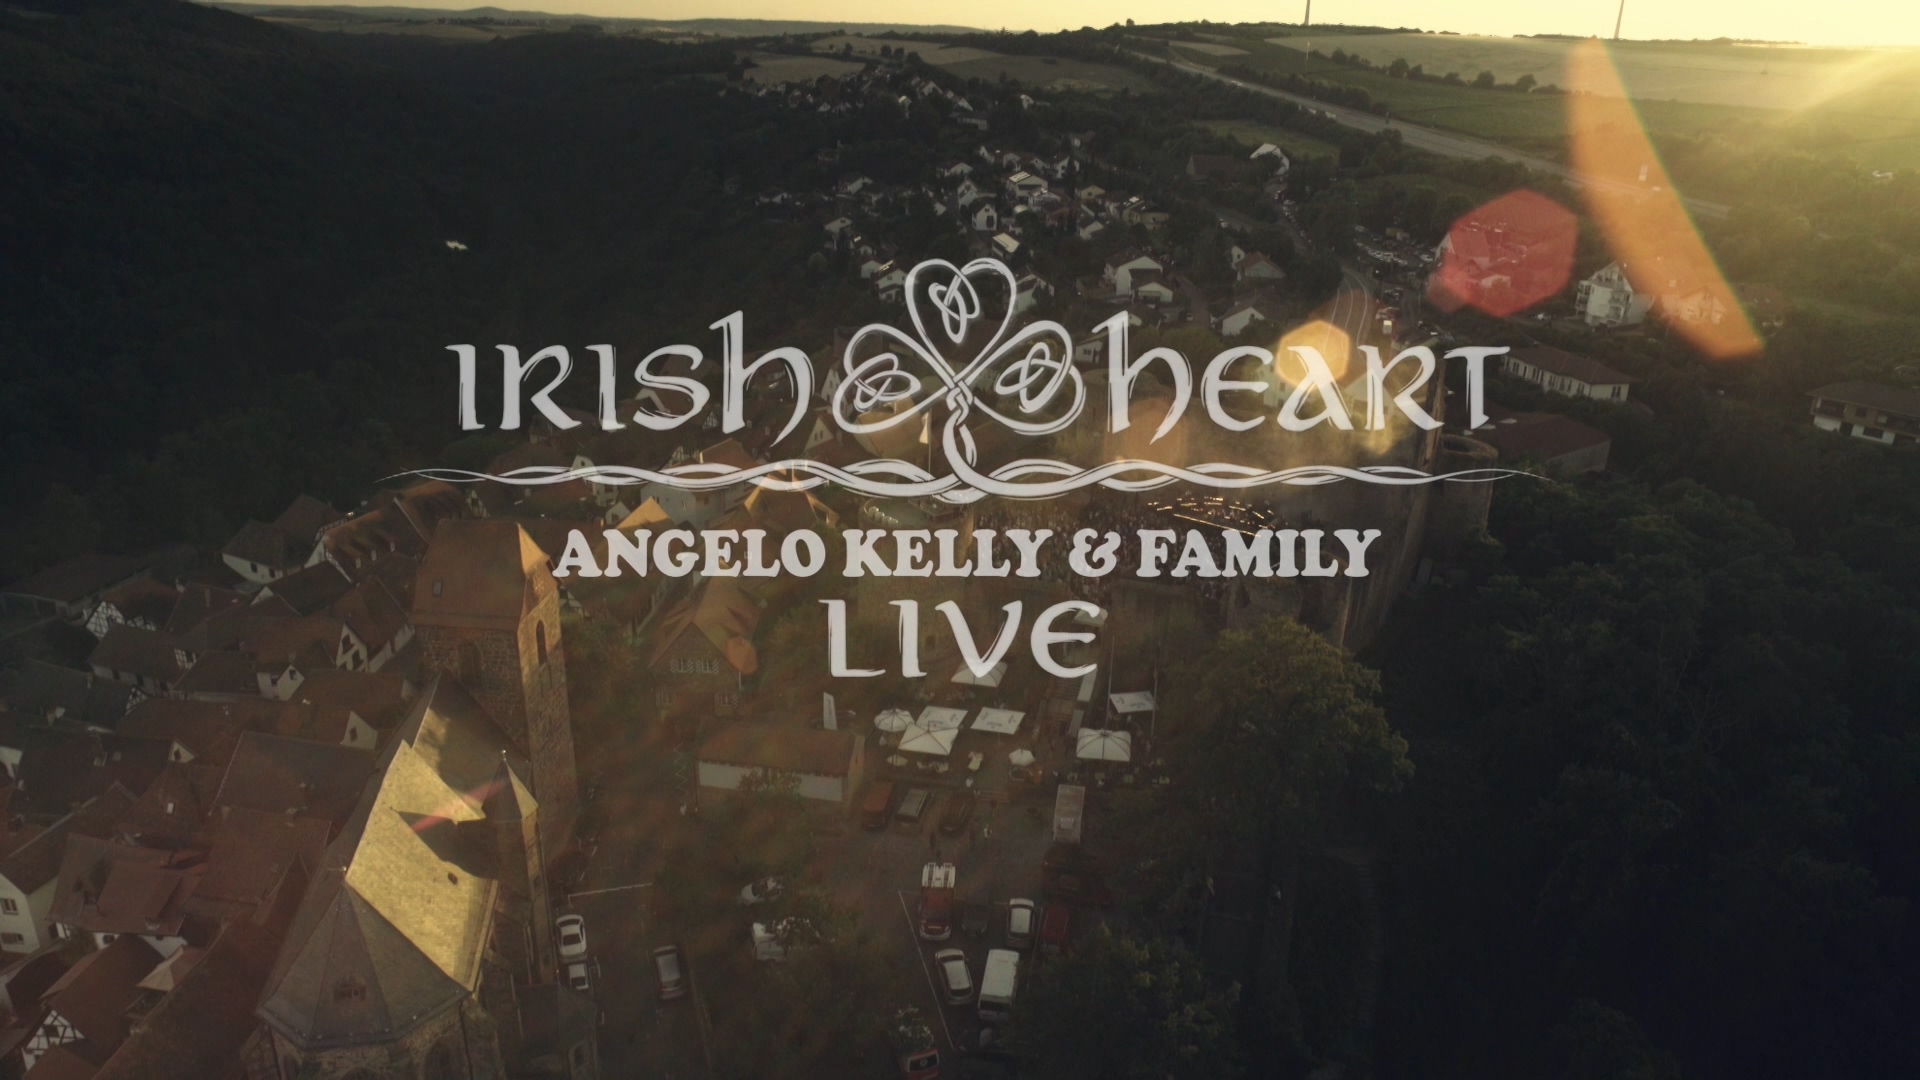 00004.m2ts(Irish.Heart.Angelo.Kelly.and.Family.Live.2018-MBLURAYFANS)_20181005_194542.055.jpg